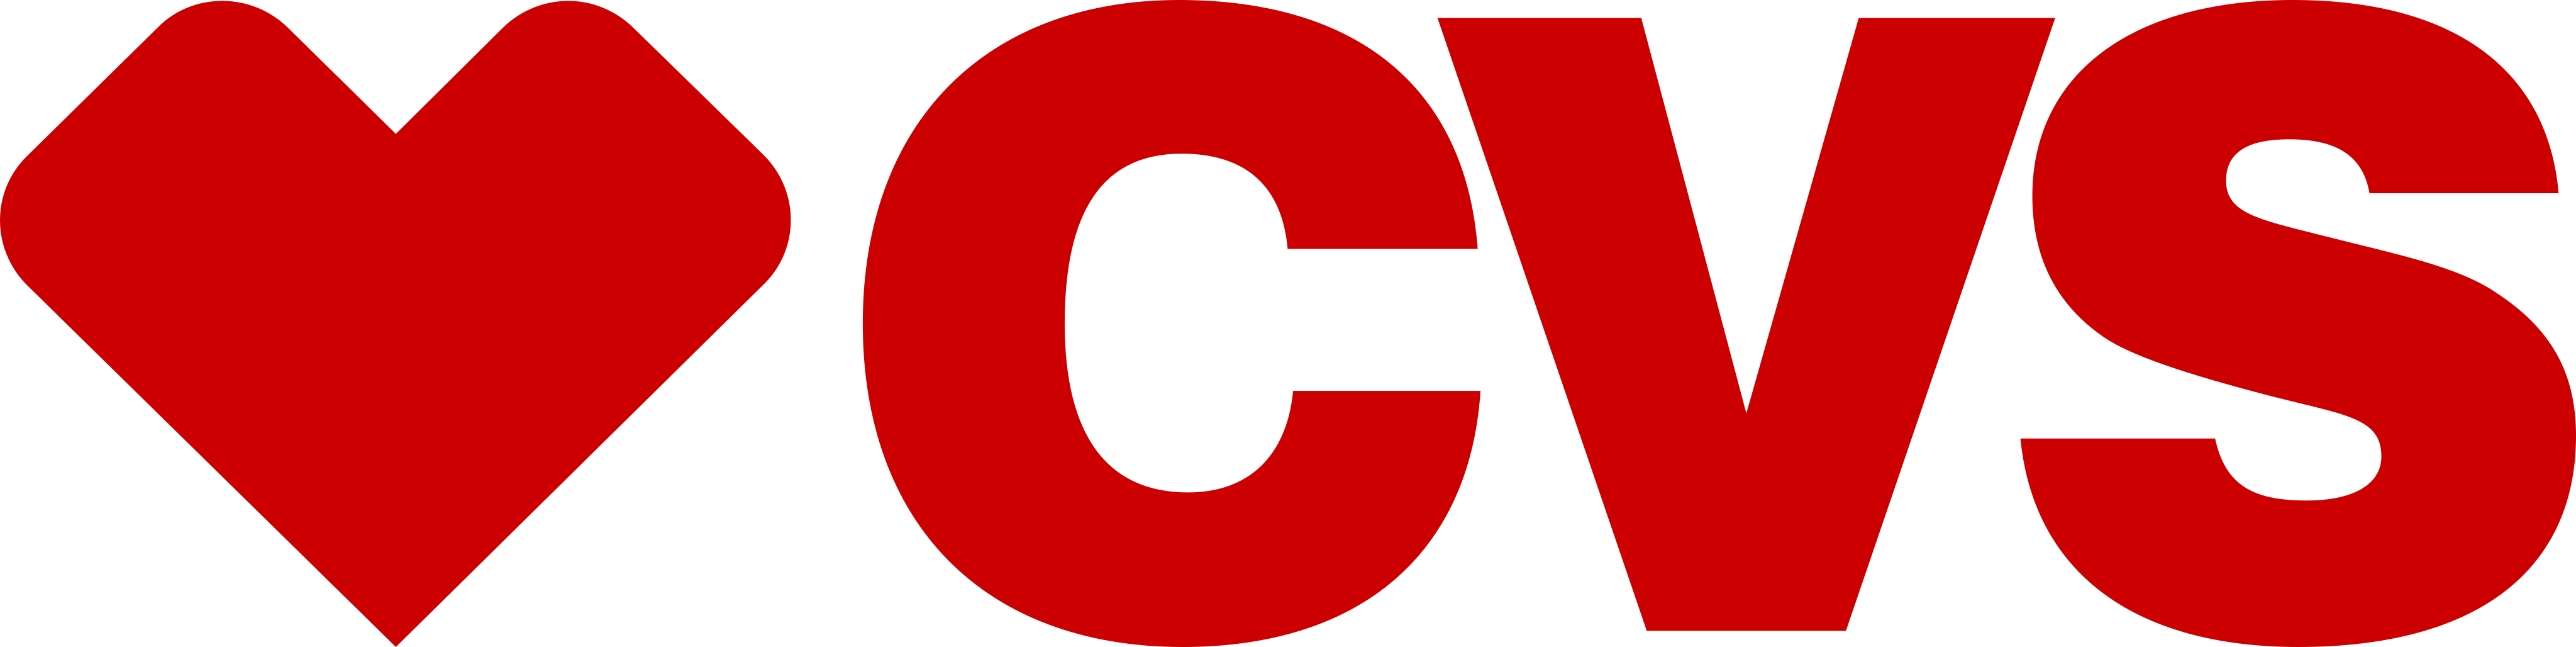 CVS Pharmacy Logo.